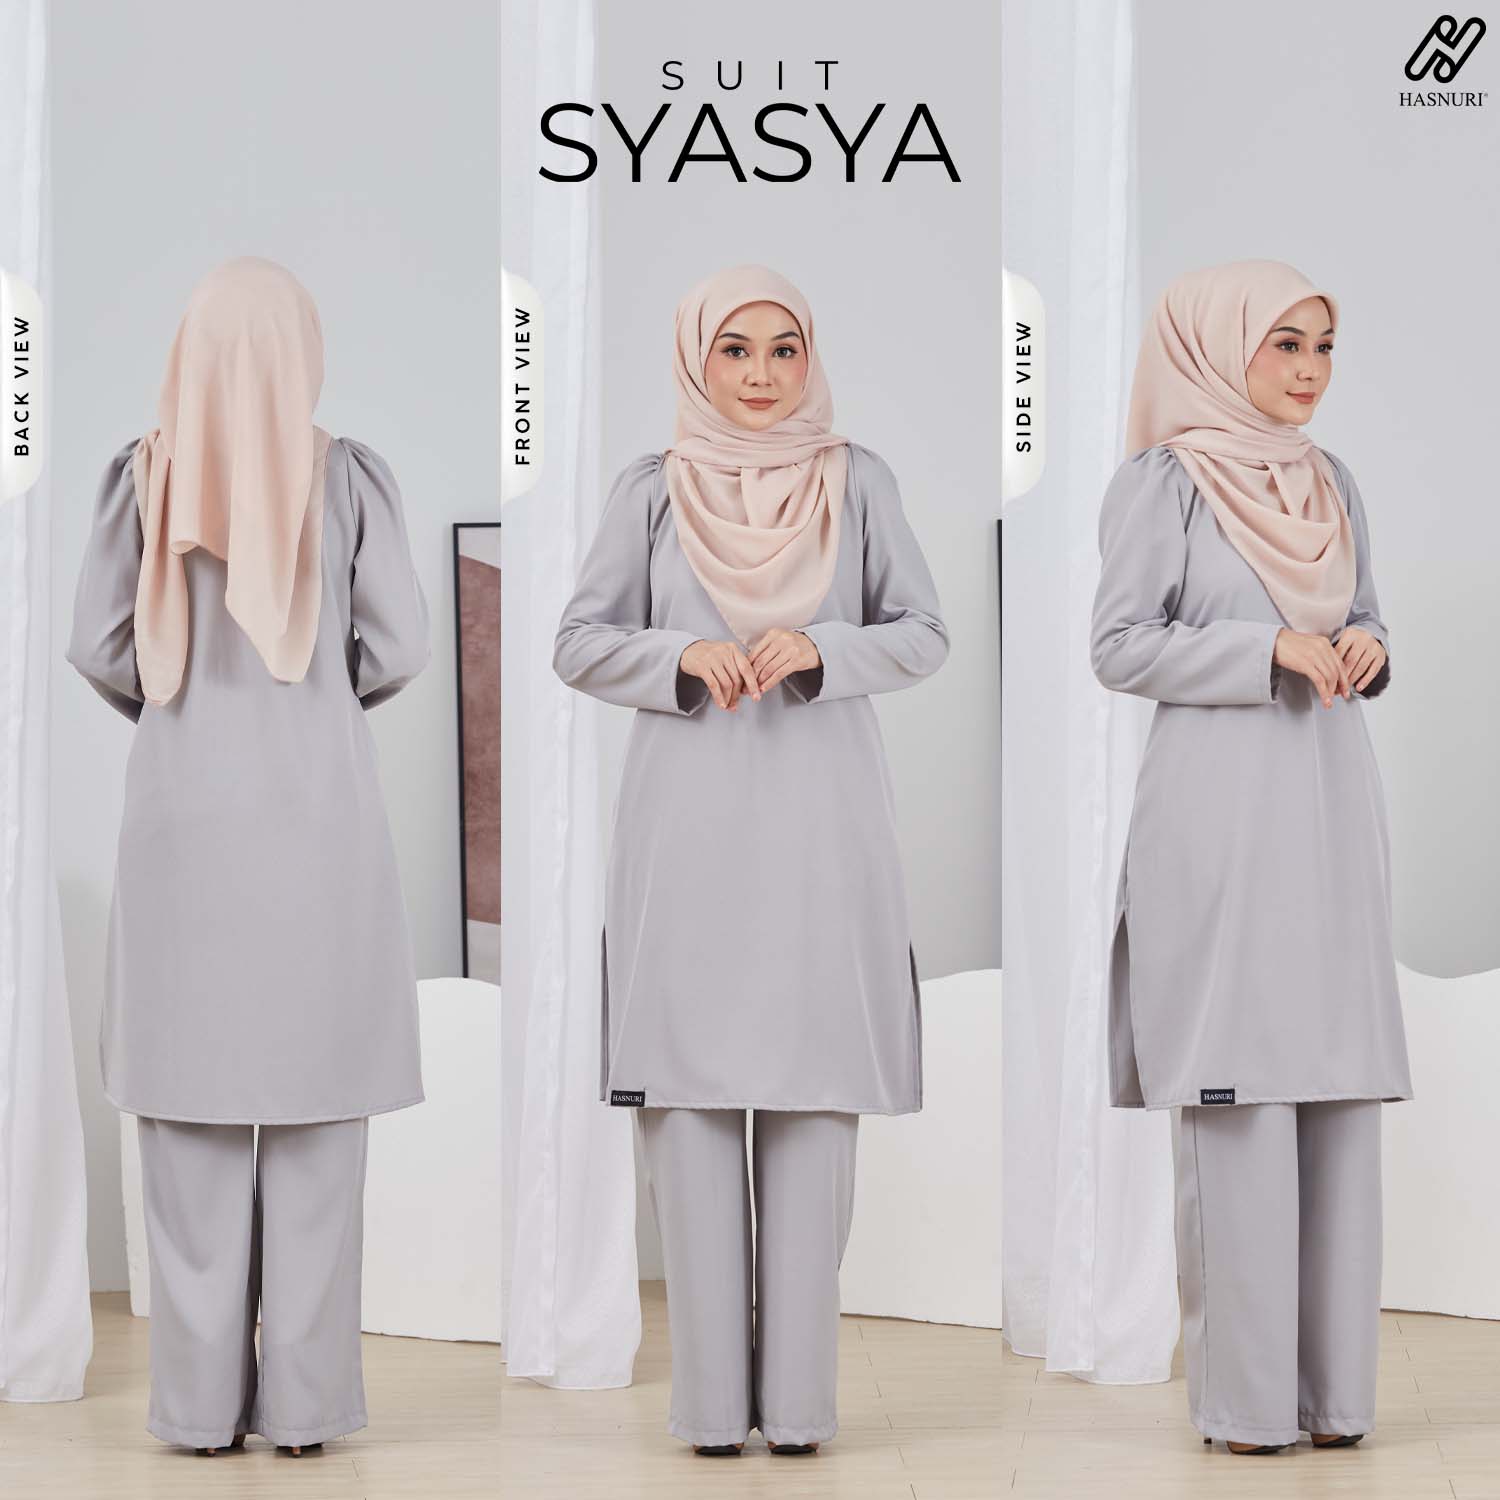 Suit Syasya - Milo